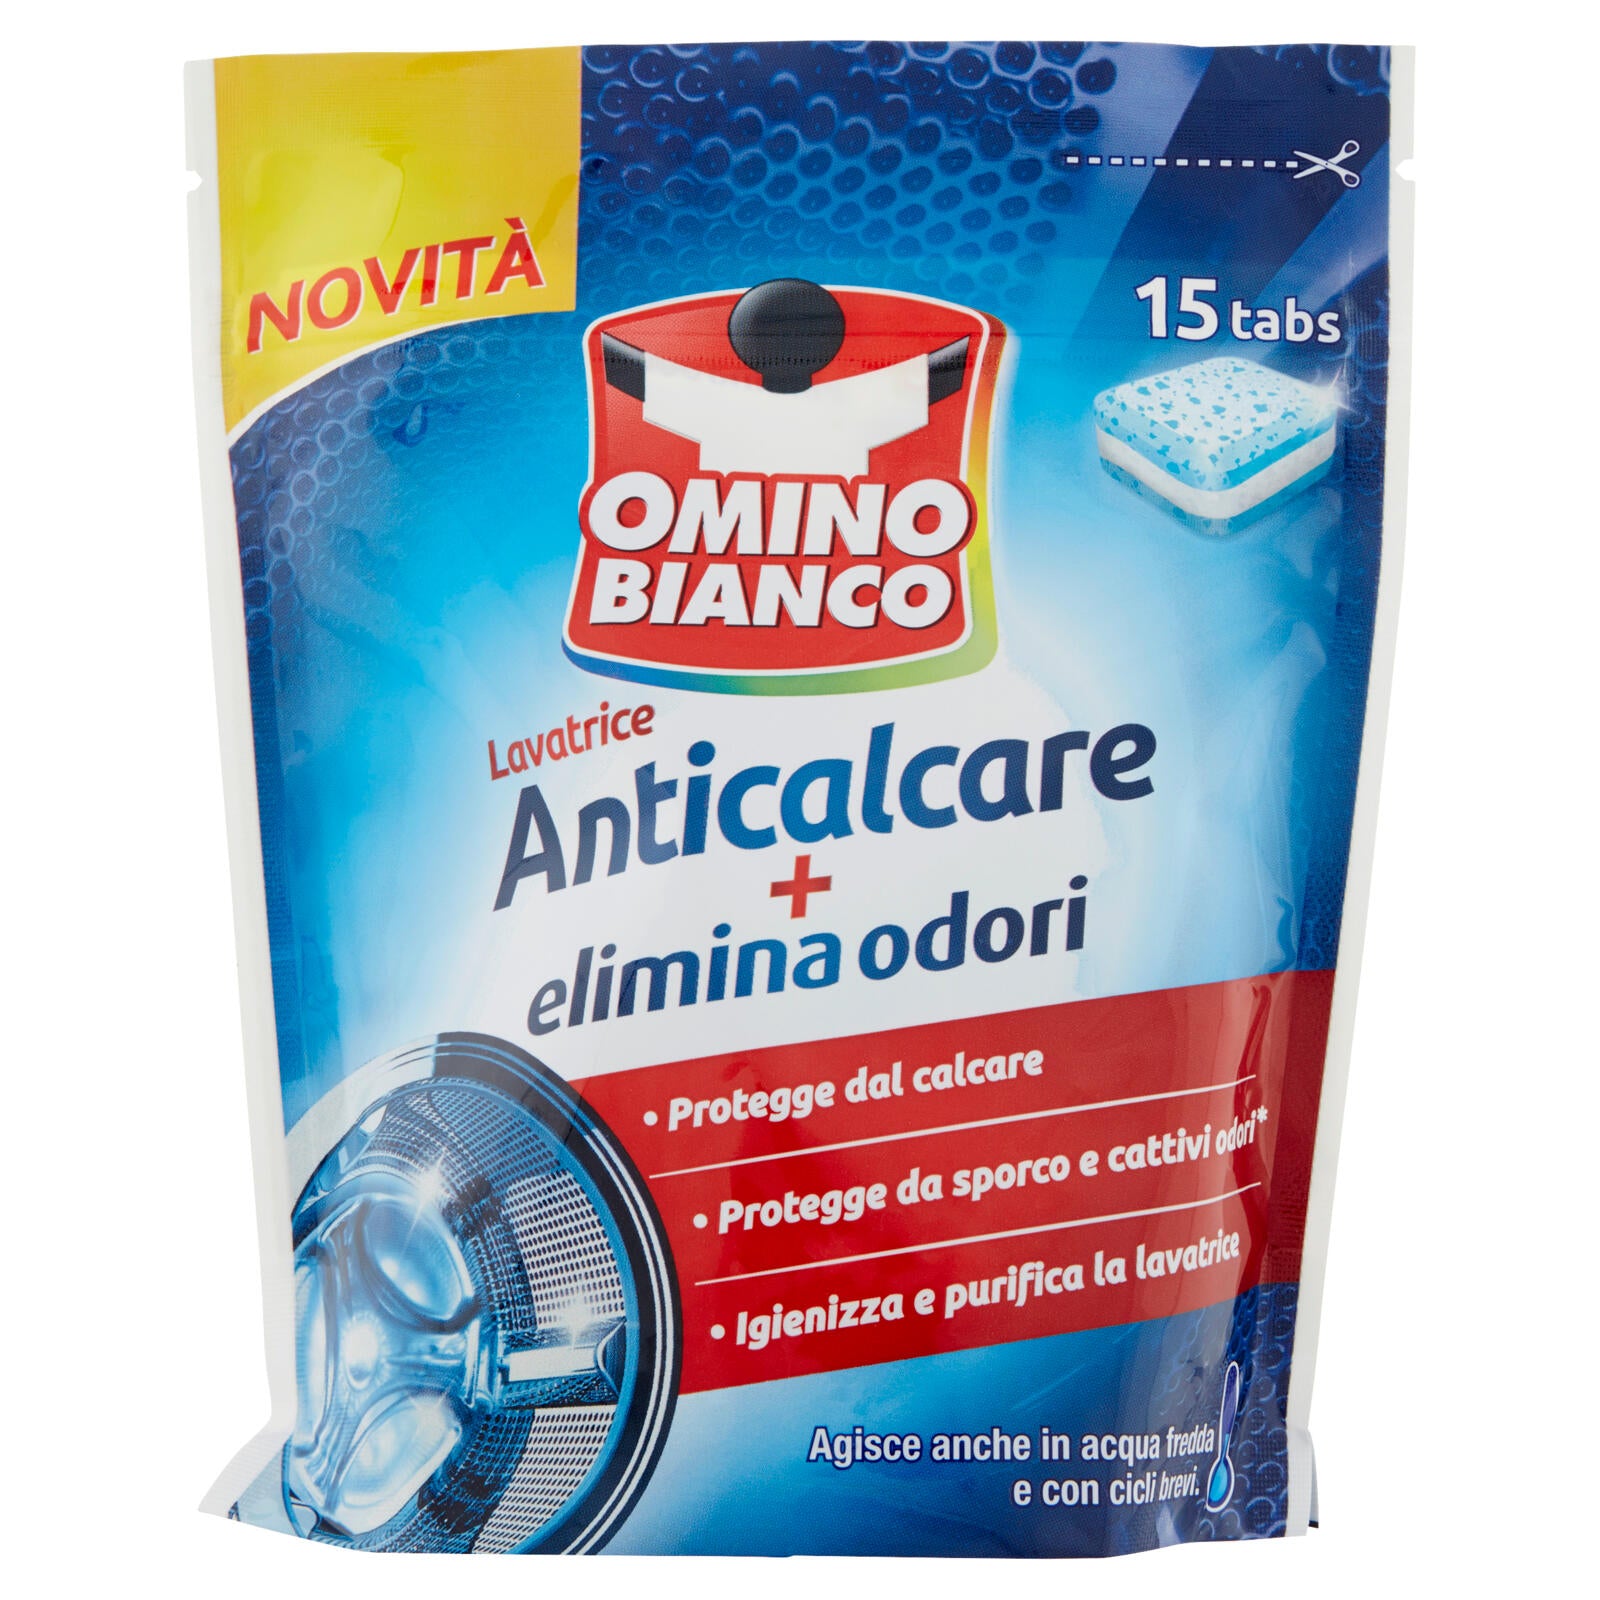 Omino Bianco Lavatrice Anticalcare + elimina odori 15 tabs 240 g ->